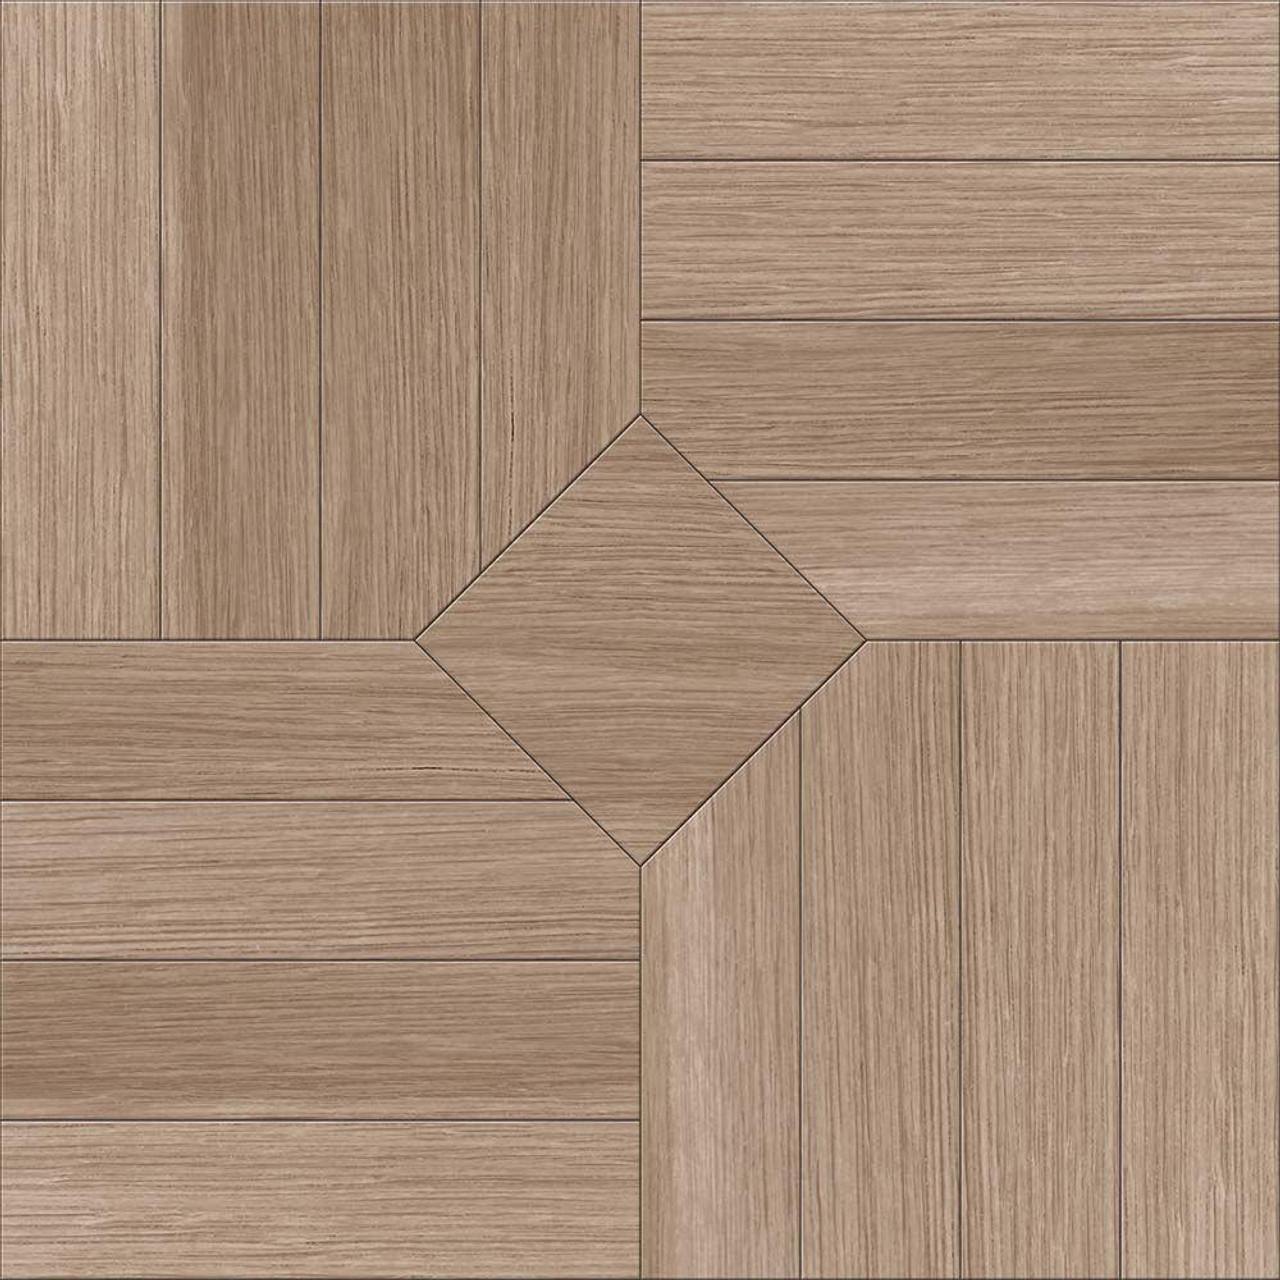 Cheap Wood Grain Tile Flooring - Wholesale Price Wood Grain Tile Flooring